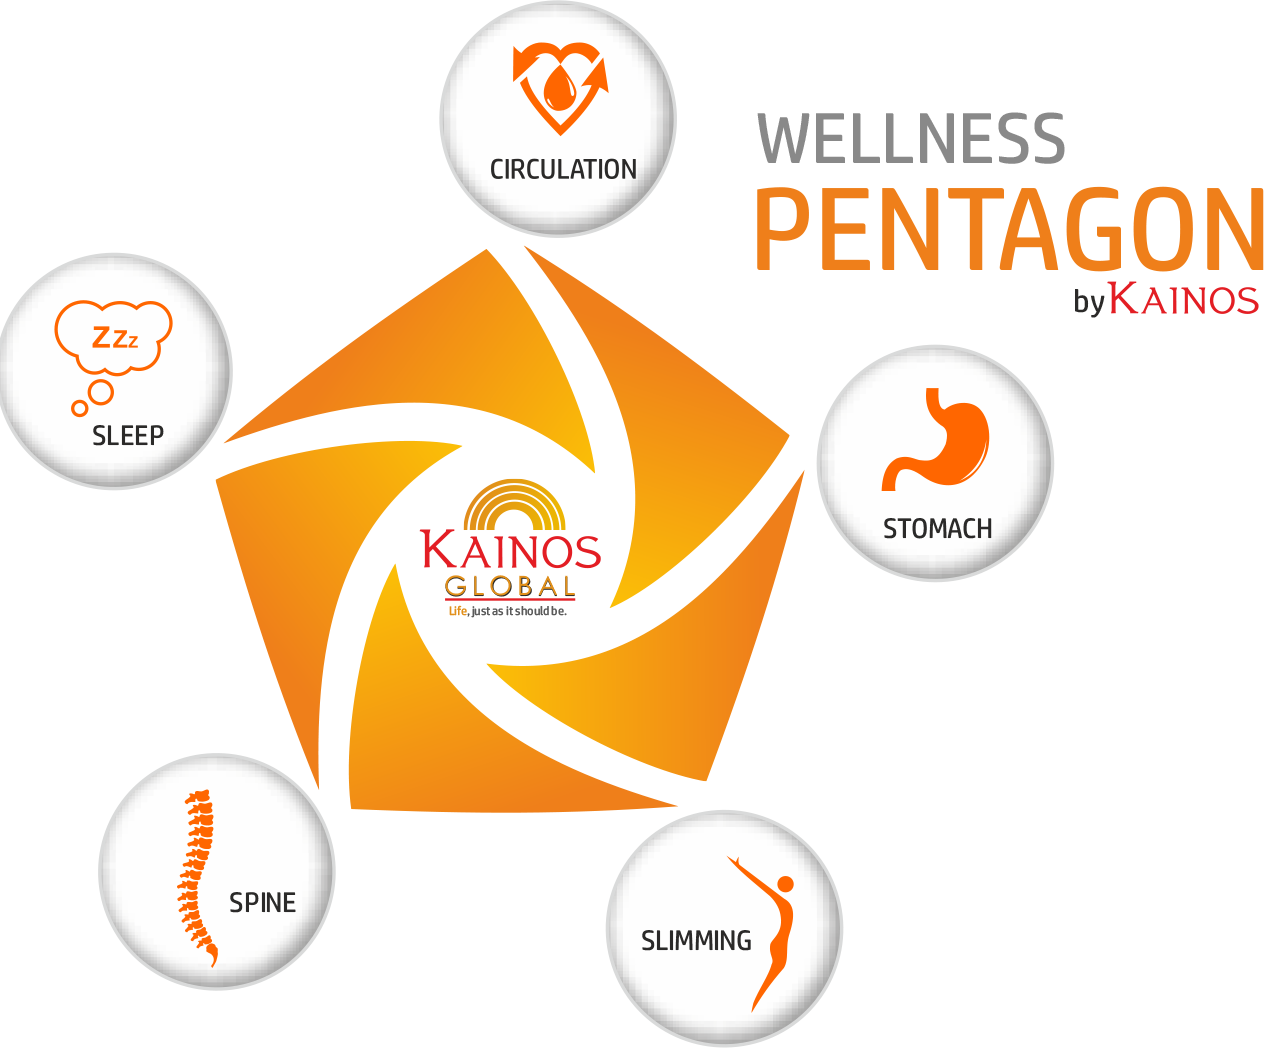 Wellness Pentagon Infographic Kainos Global PNG